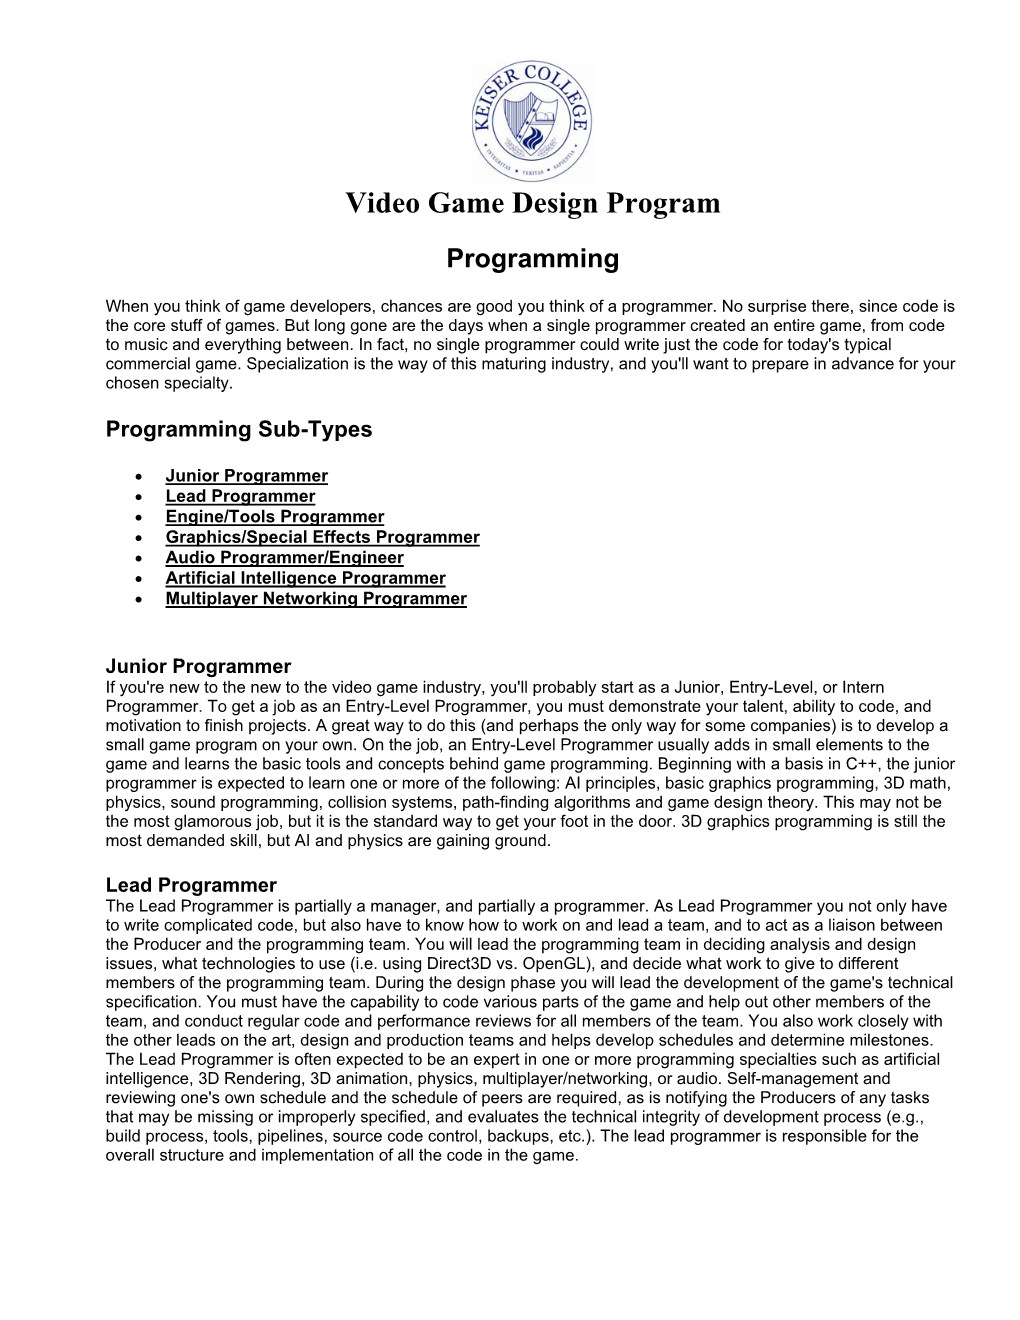 Video Game Design Program Programming